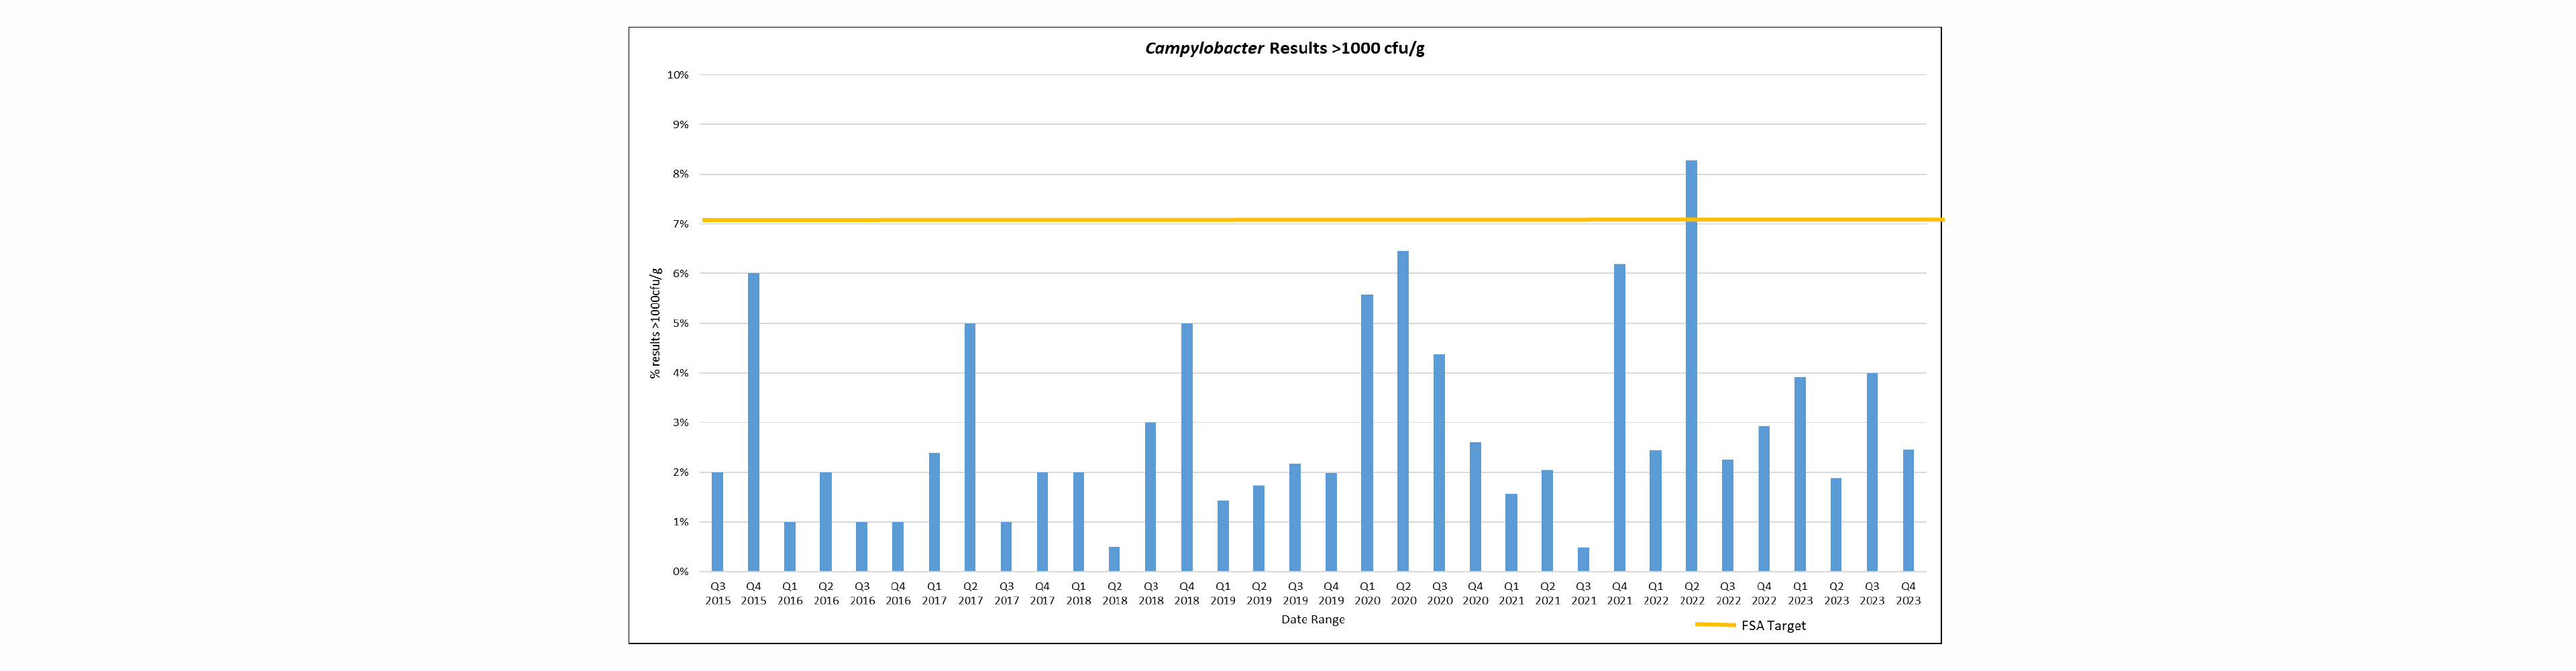 Lidl Campylobacter Results > 1000 cfu/g